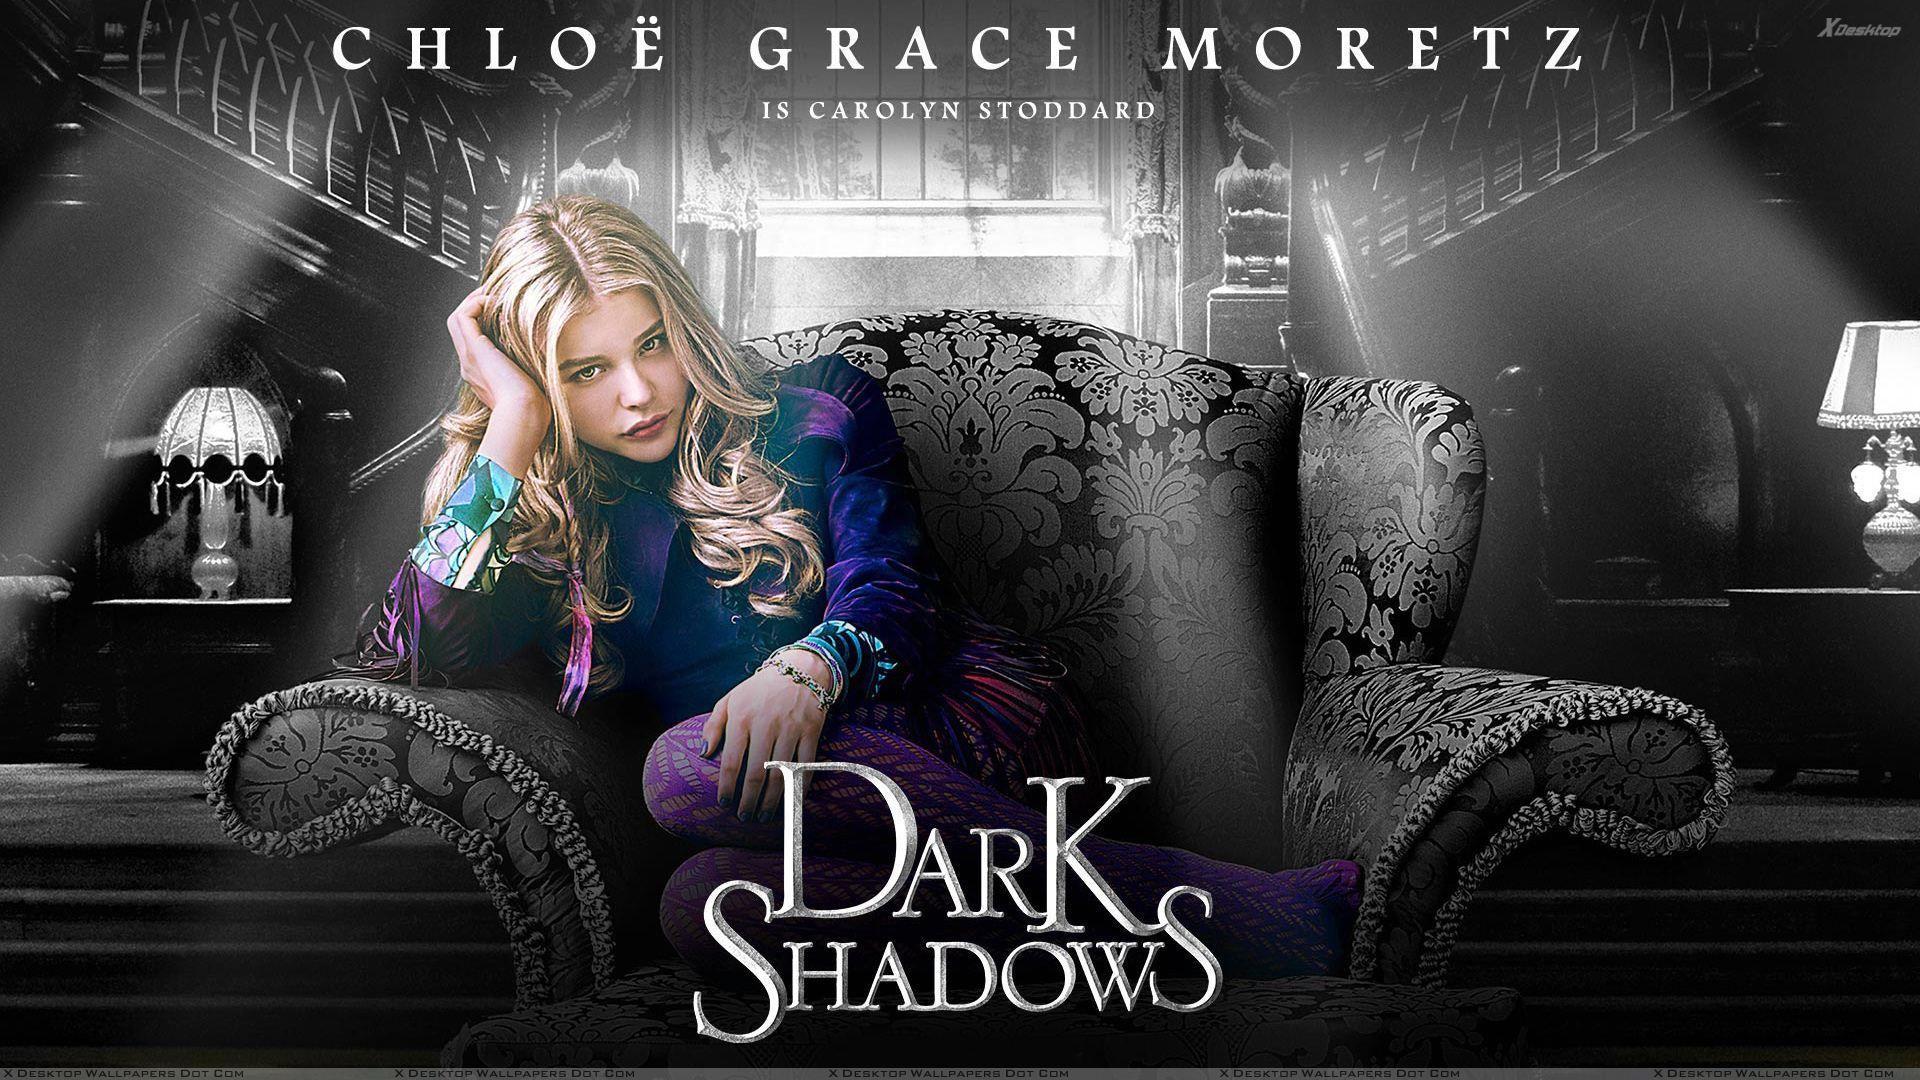 Chloe Grace Moretz Wallpaper, Photo & Image in HD